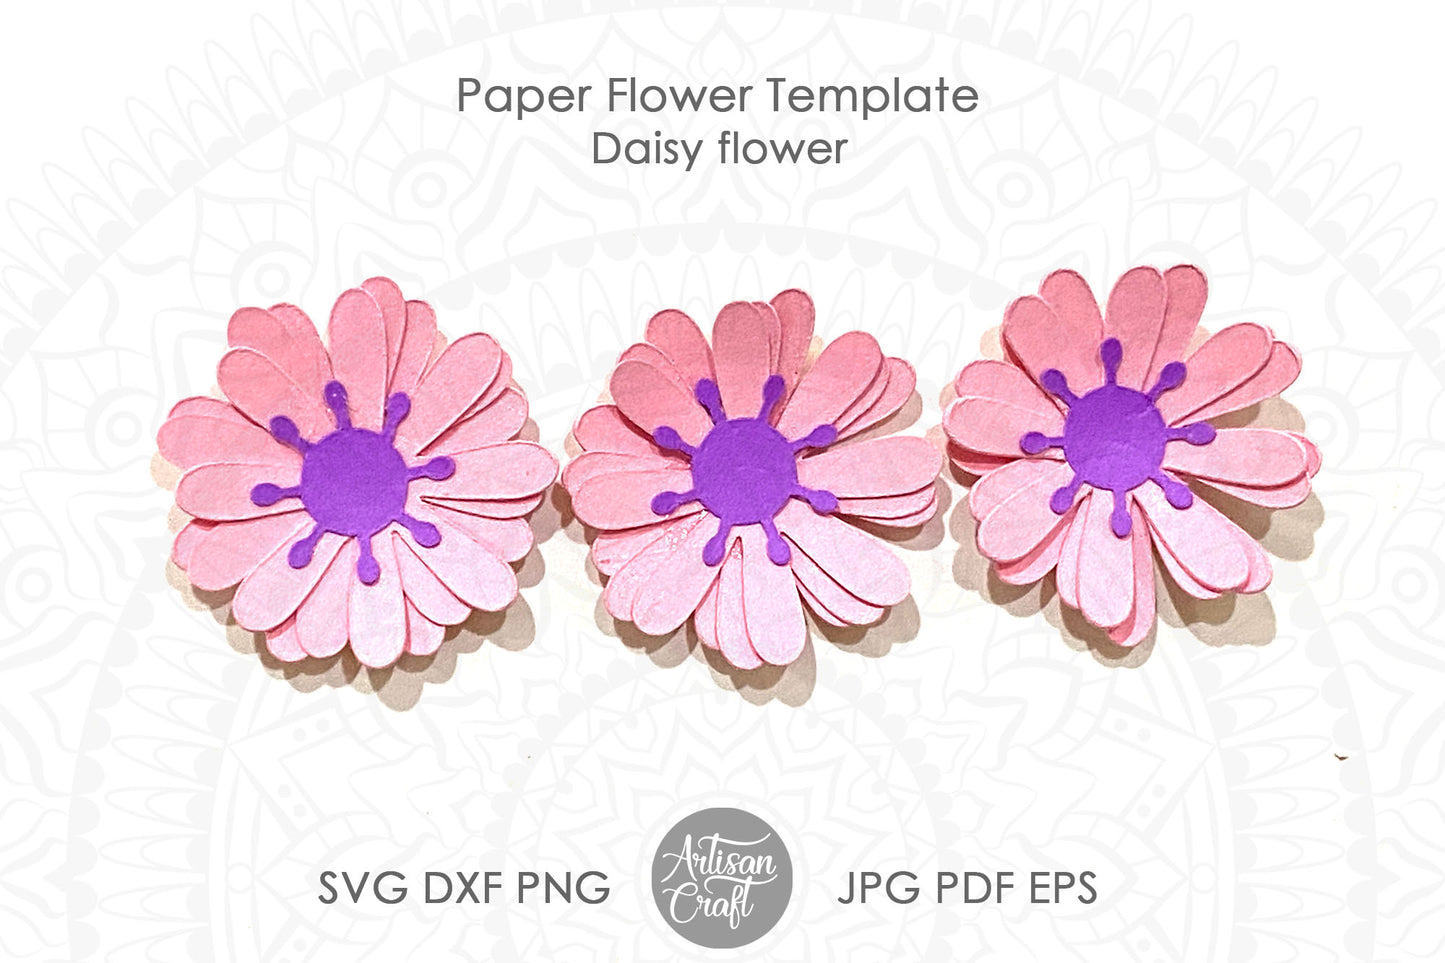 Daisy Paper Flower SVG cut files for Cricut